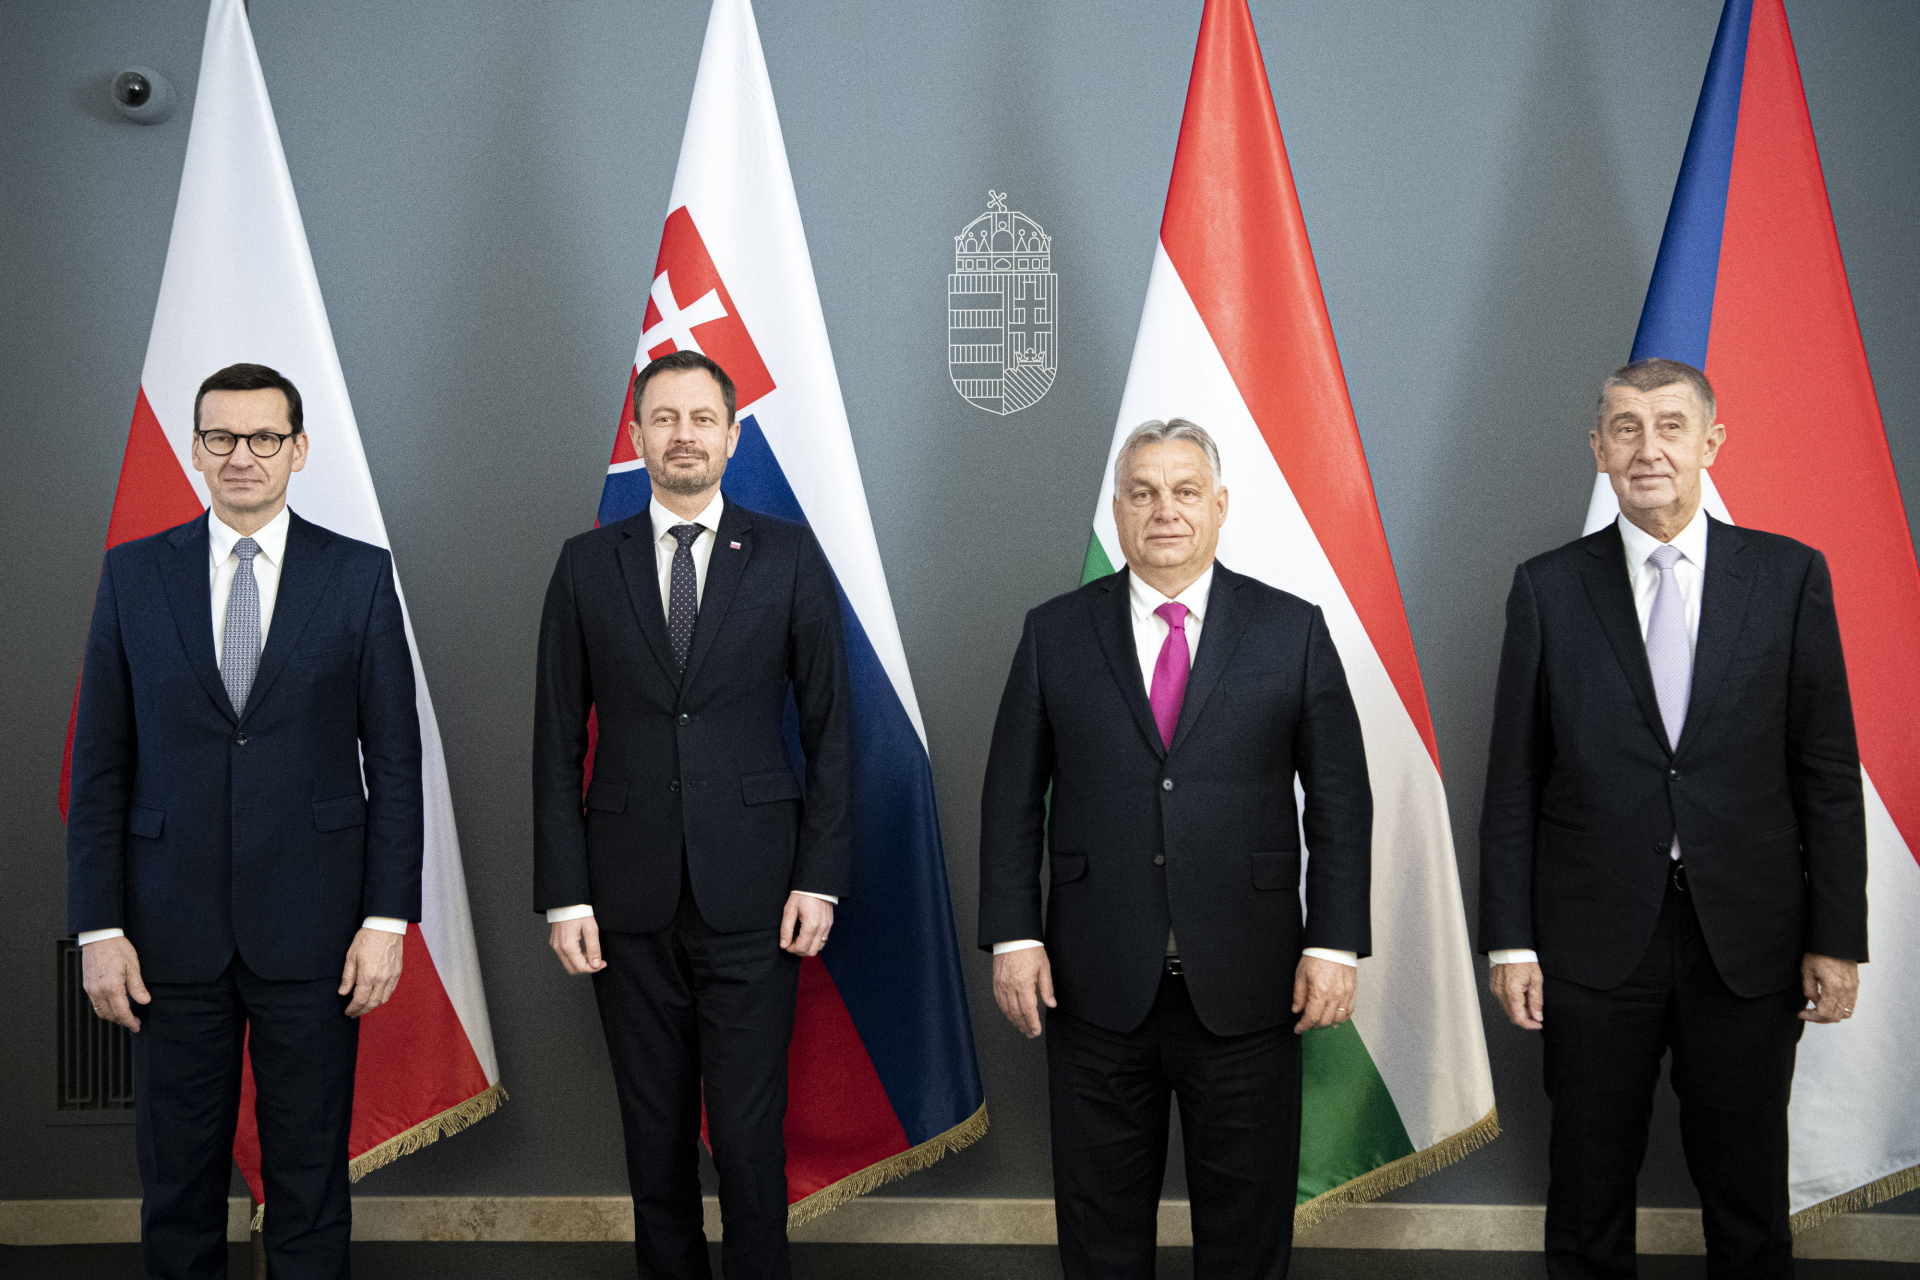 Mateusz Morawiecki, Eduard Heger, Orbán Viktor, Andrej Babis, Visegrádi Négyek, V4